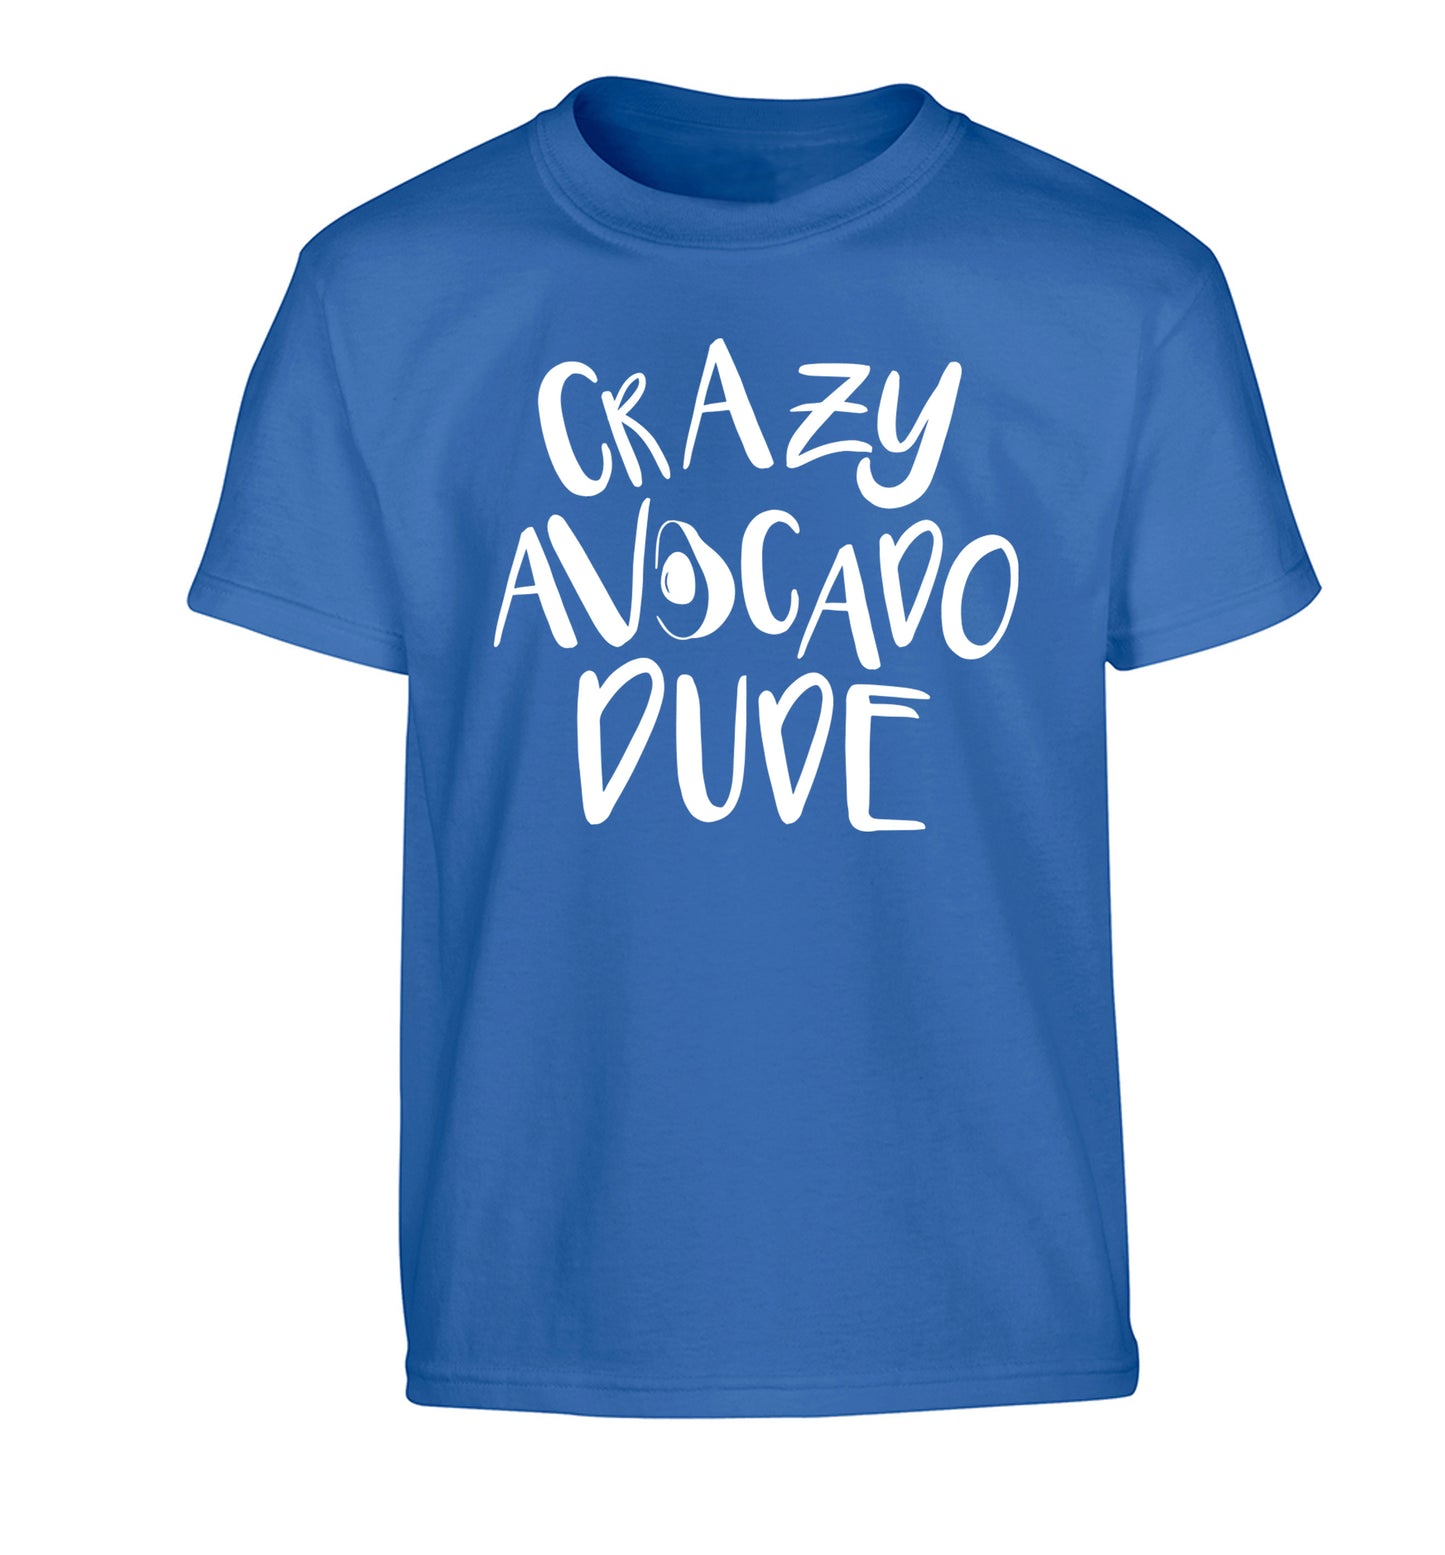 Crazy avocado dude Children's blue Tshirt 12-14 Years